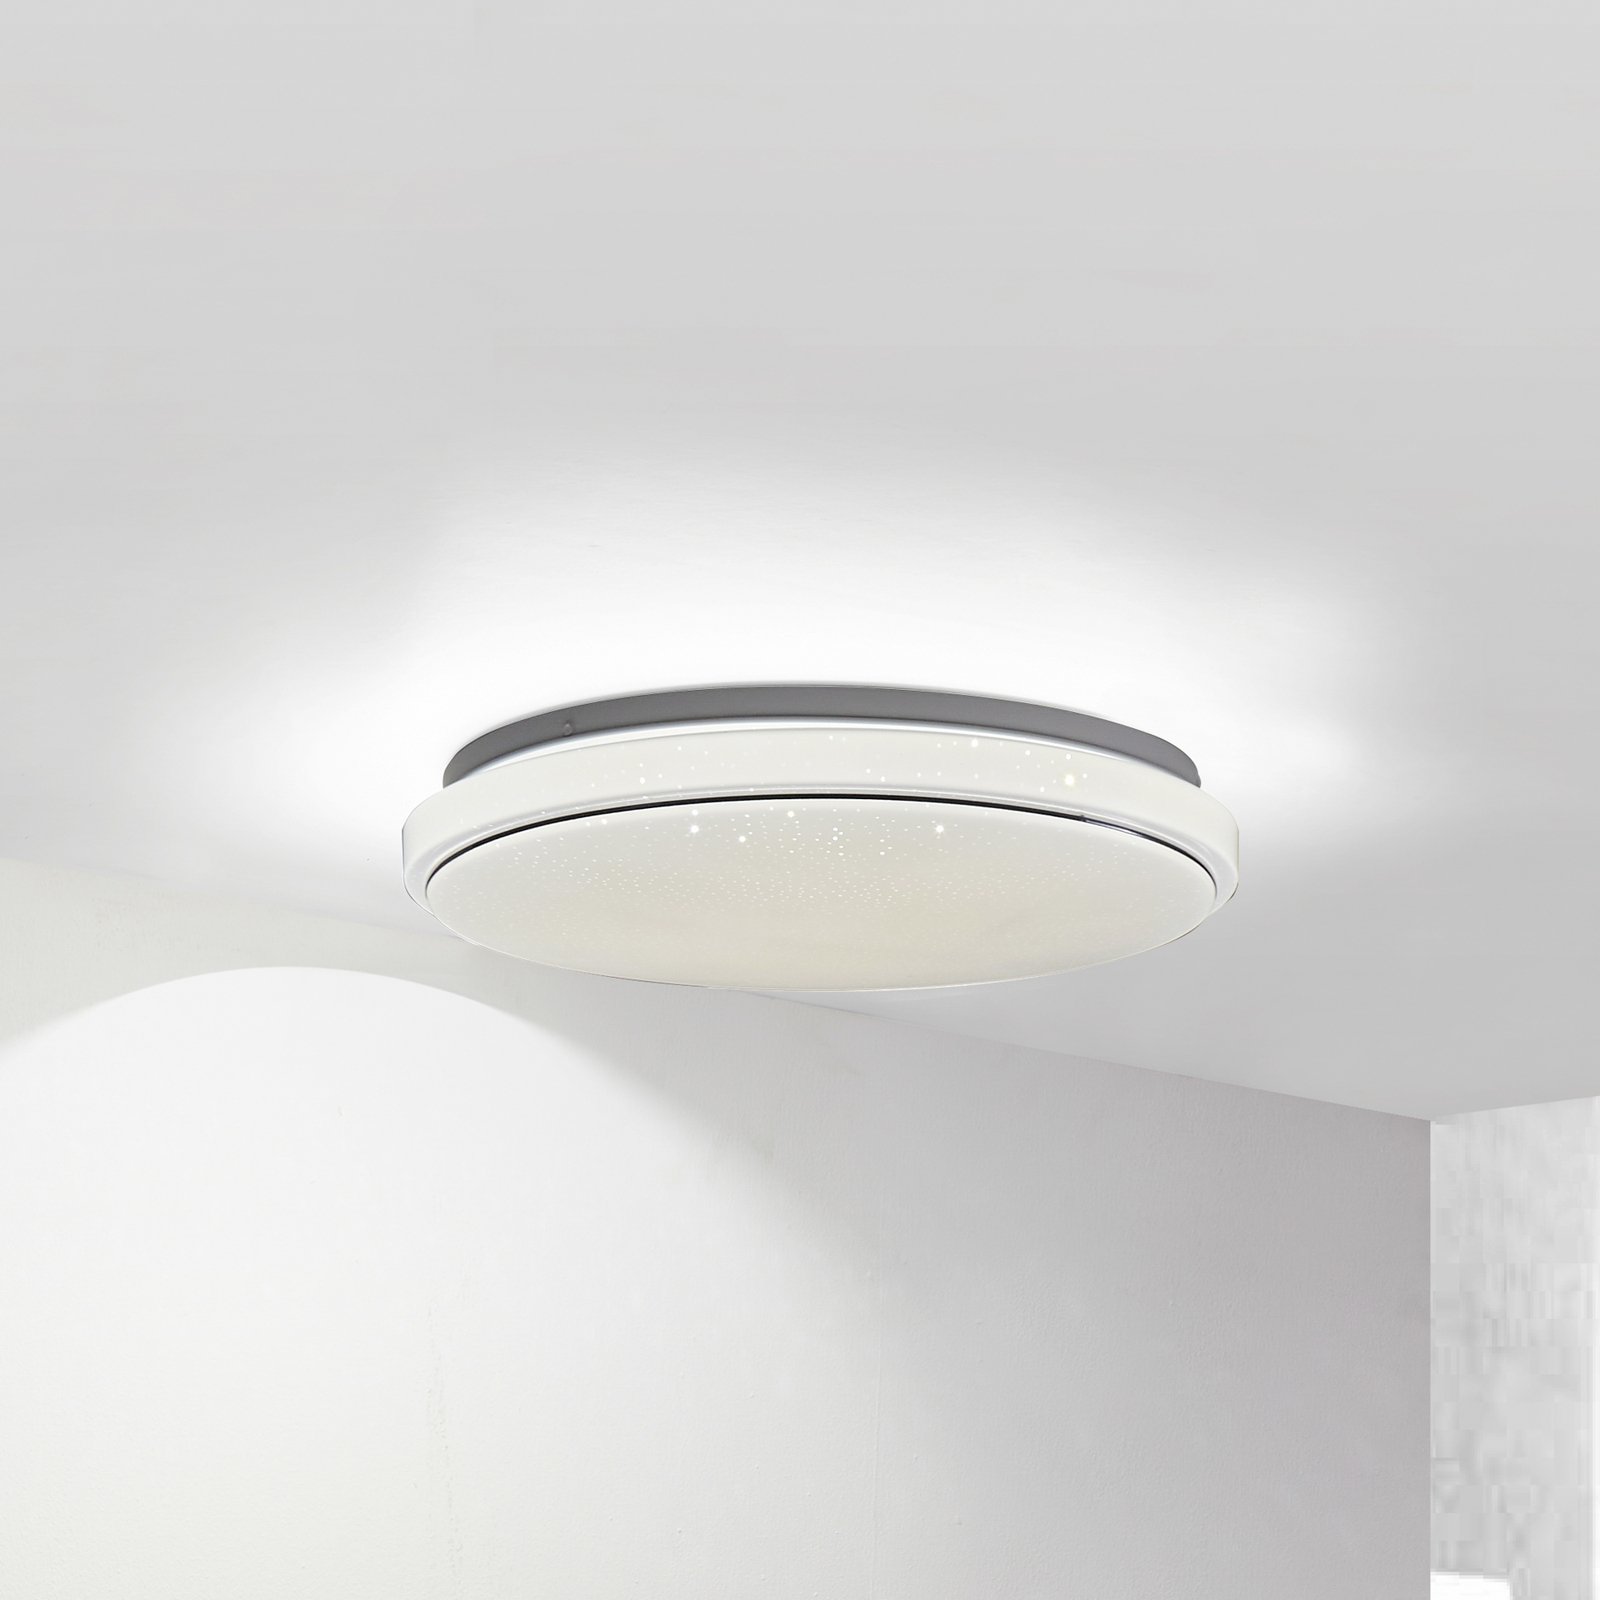 Lindby LED plafondlamp Glamo, chroom/wit, kunststof, IP44